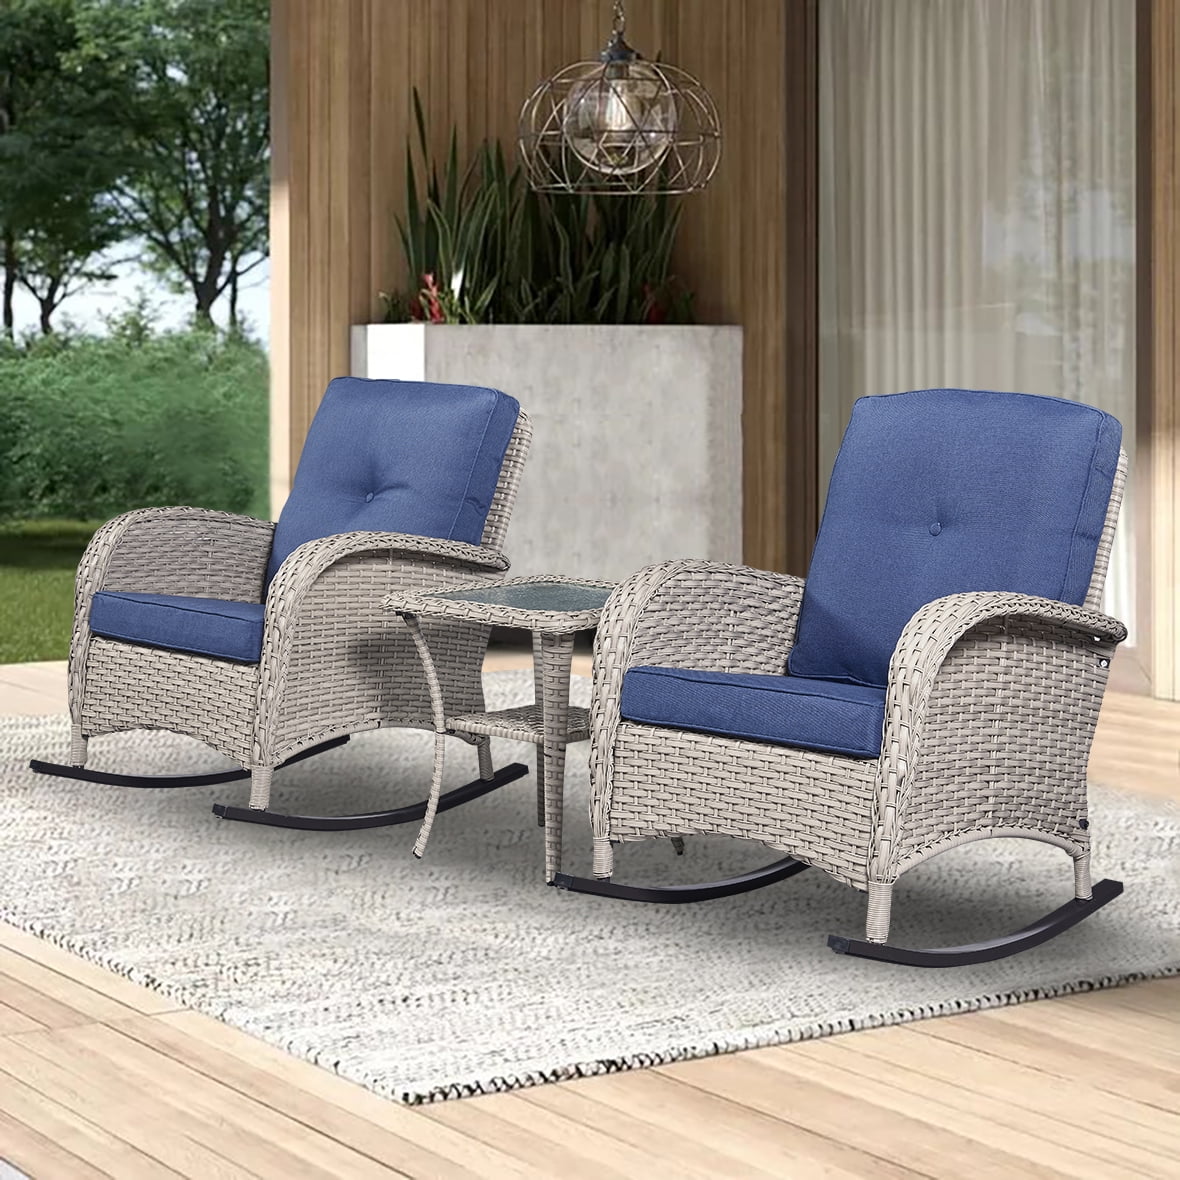 Mainstays 43 x 20 Black and Tan Palm Rectangle Patio Chair Cushion, 1  Piece